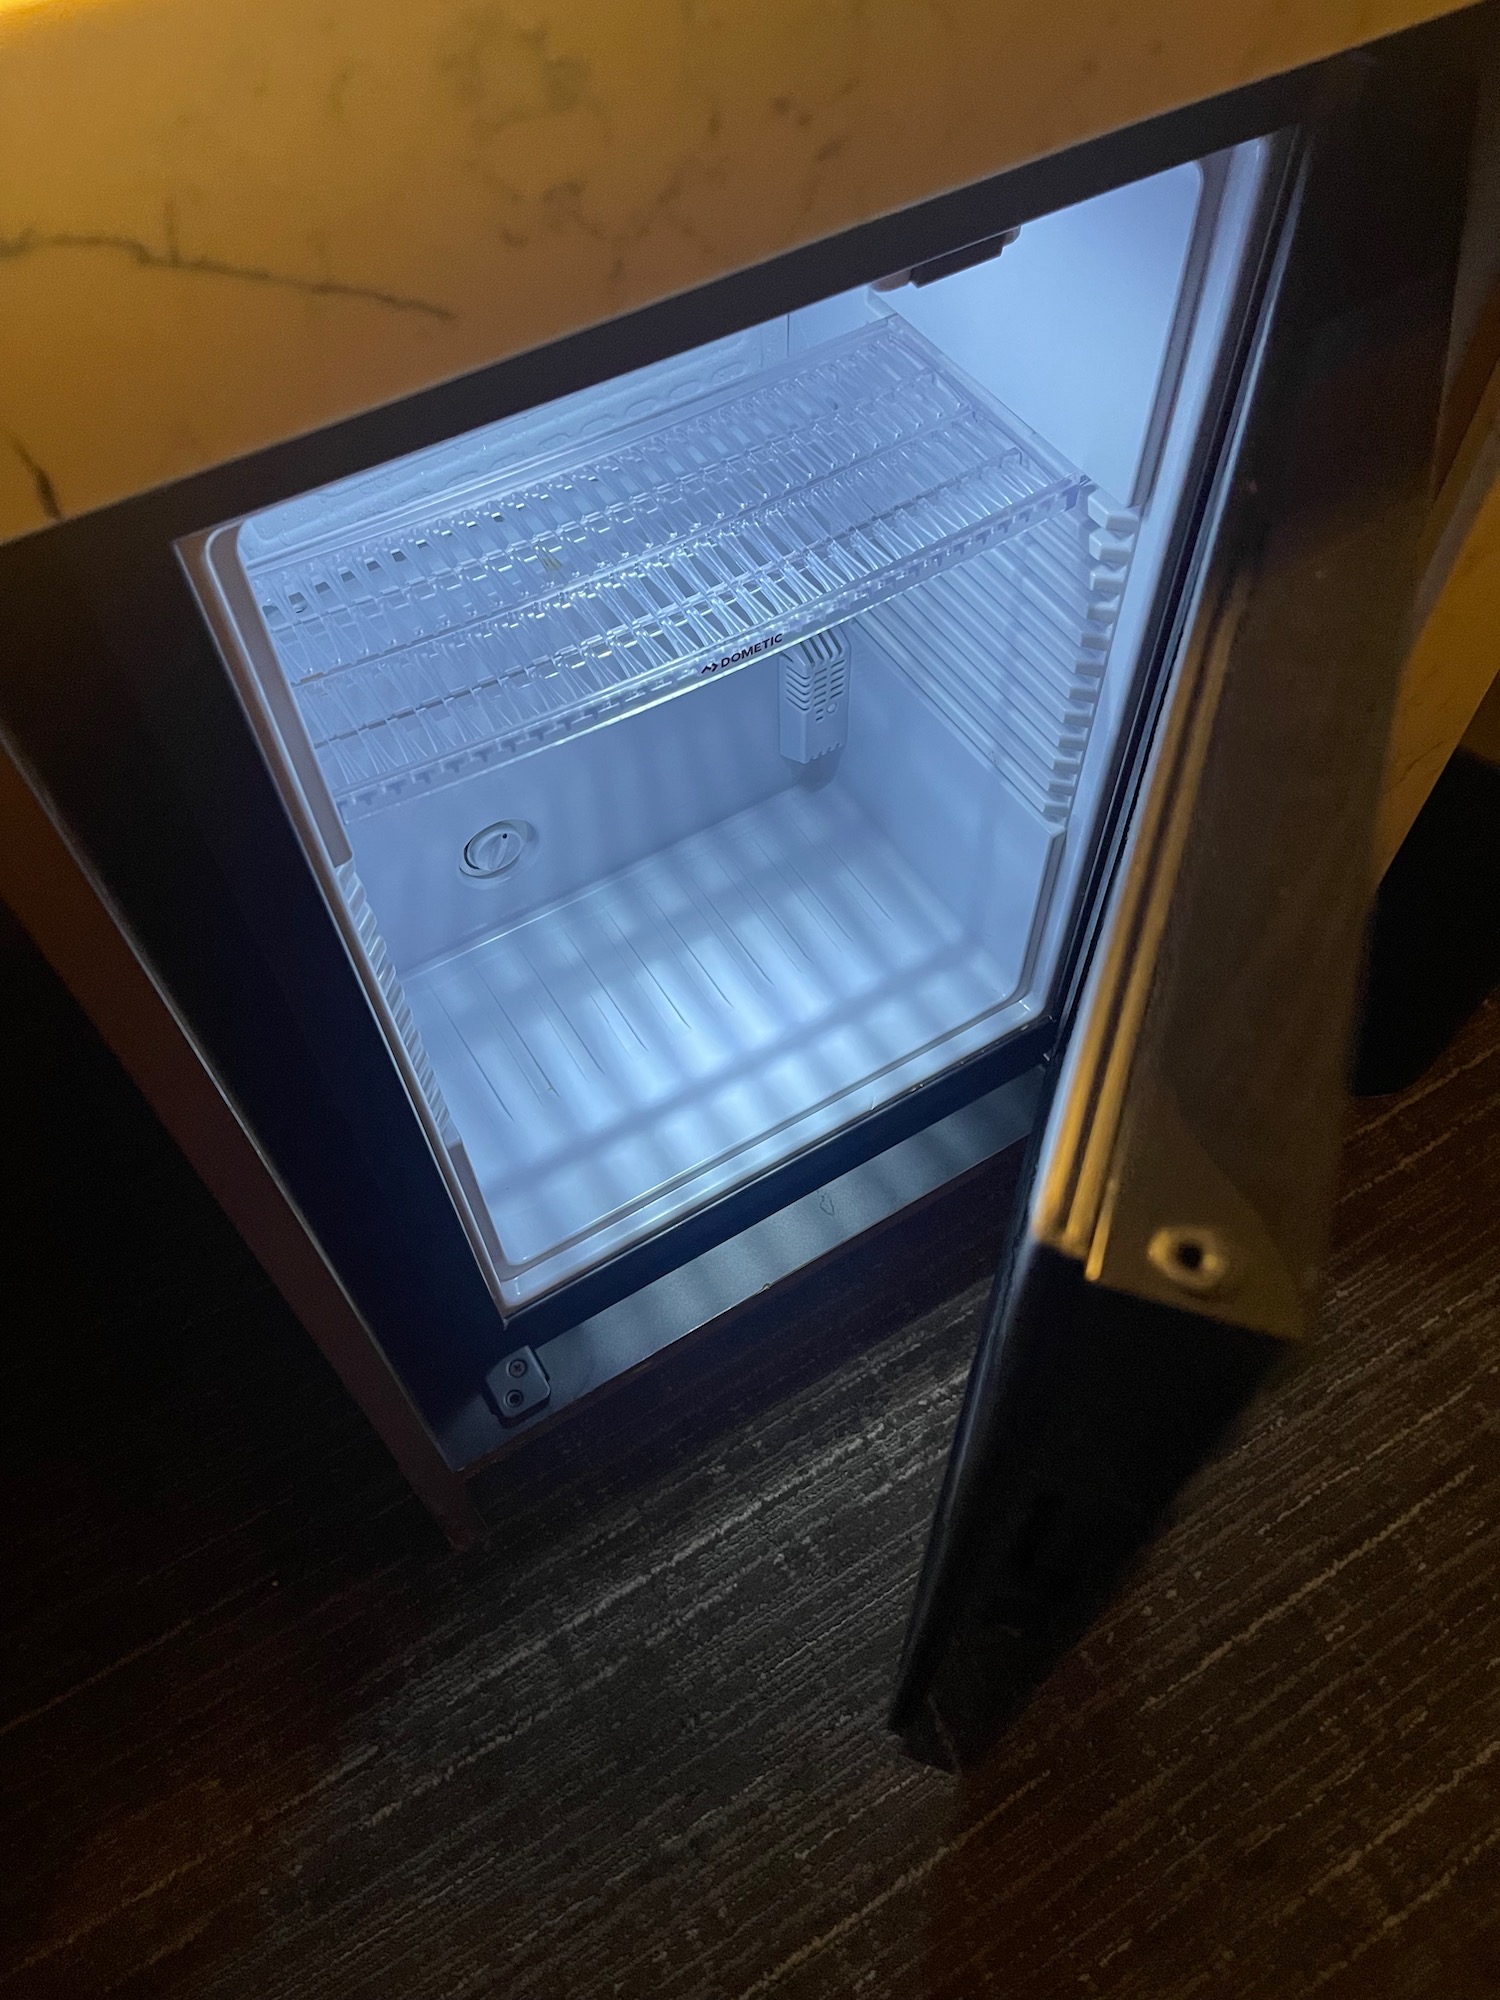 a small refrigerator with a light inside